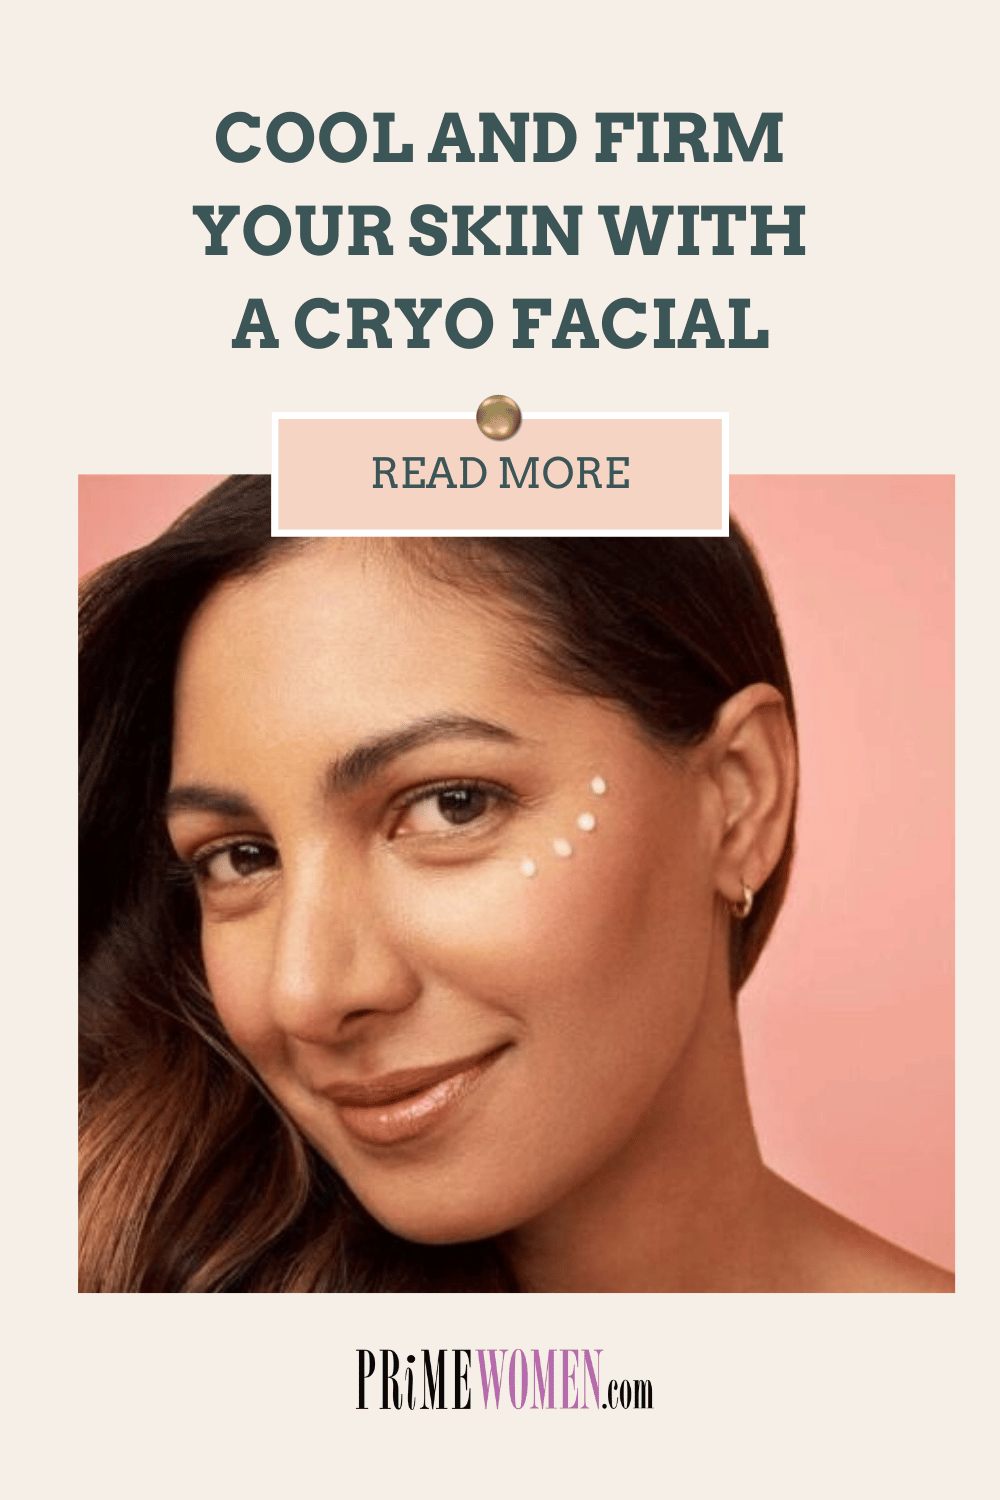 Benefits of a cryo facial